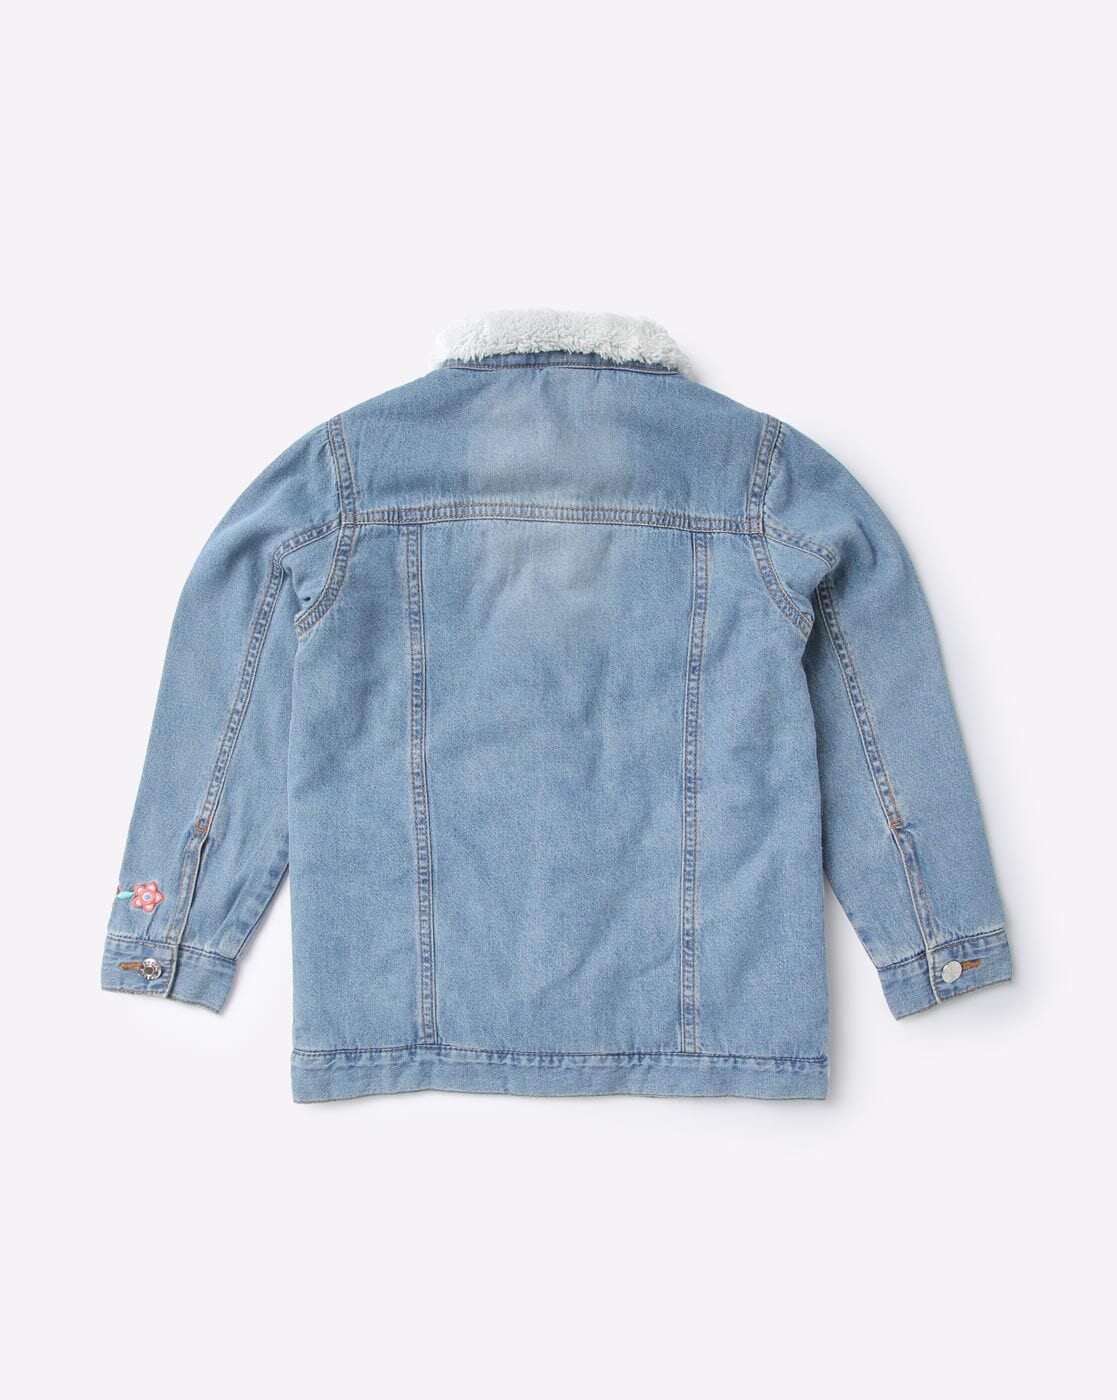 Levi's® Girls' Trucker Jeans Jacket - Light Wash : Target